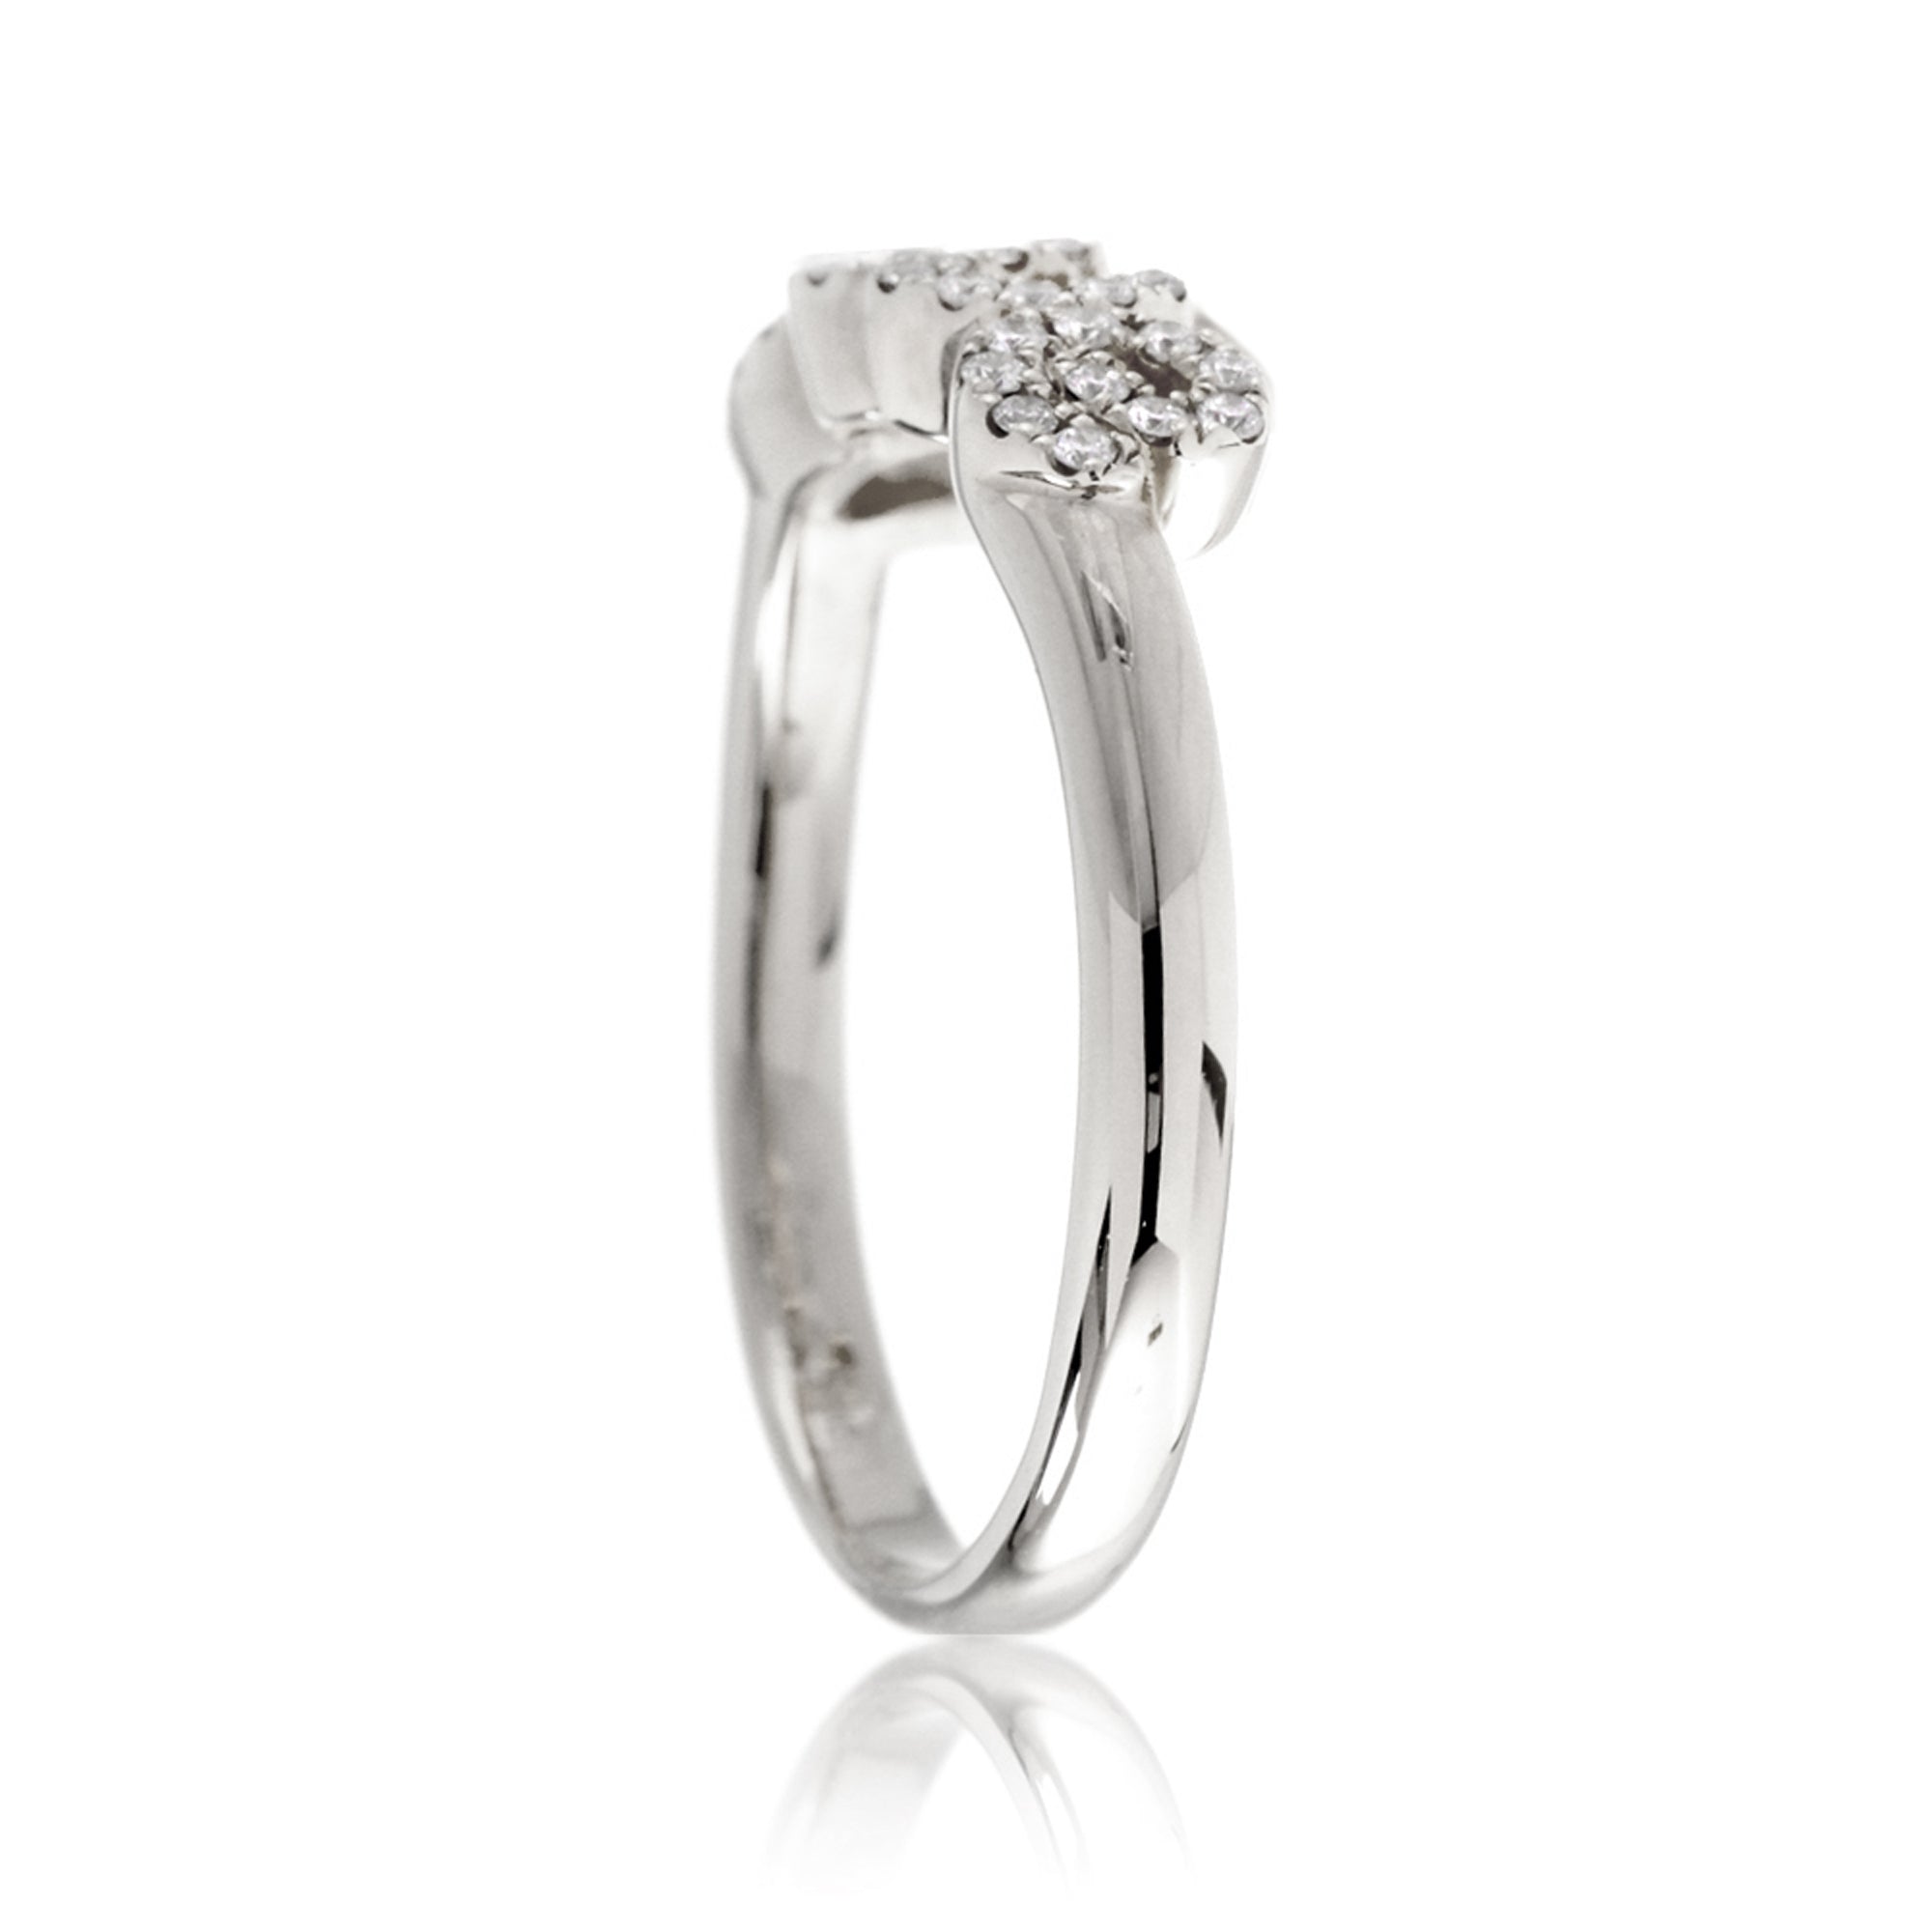 The Love Diamond Ring